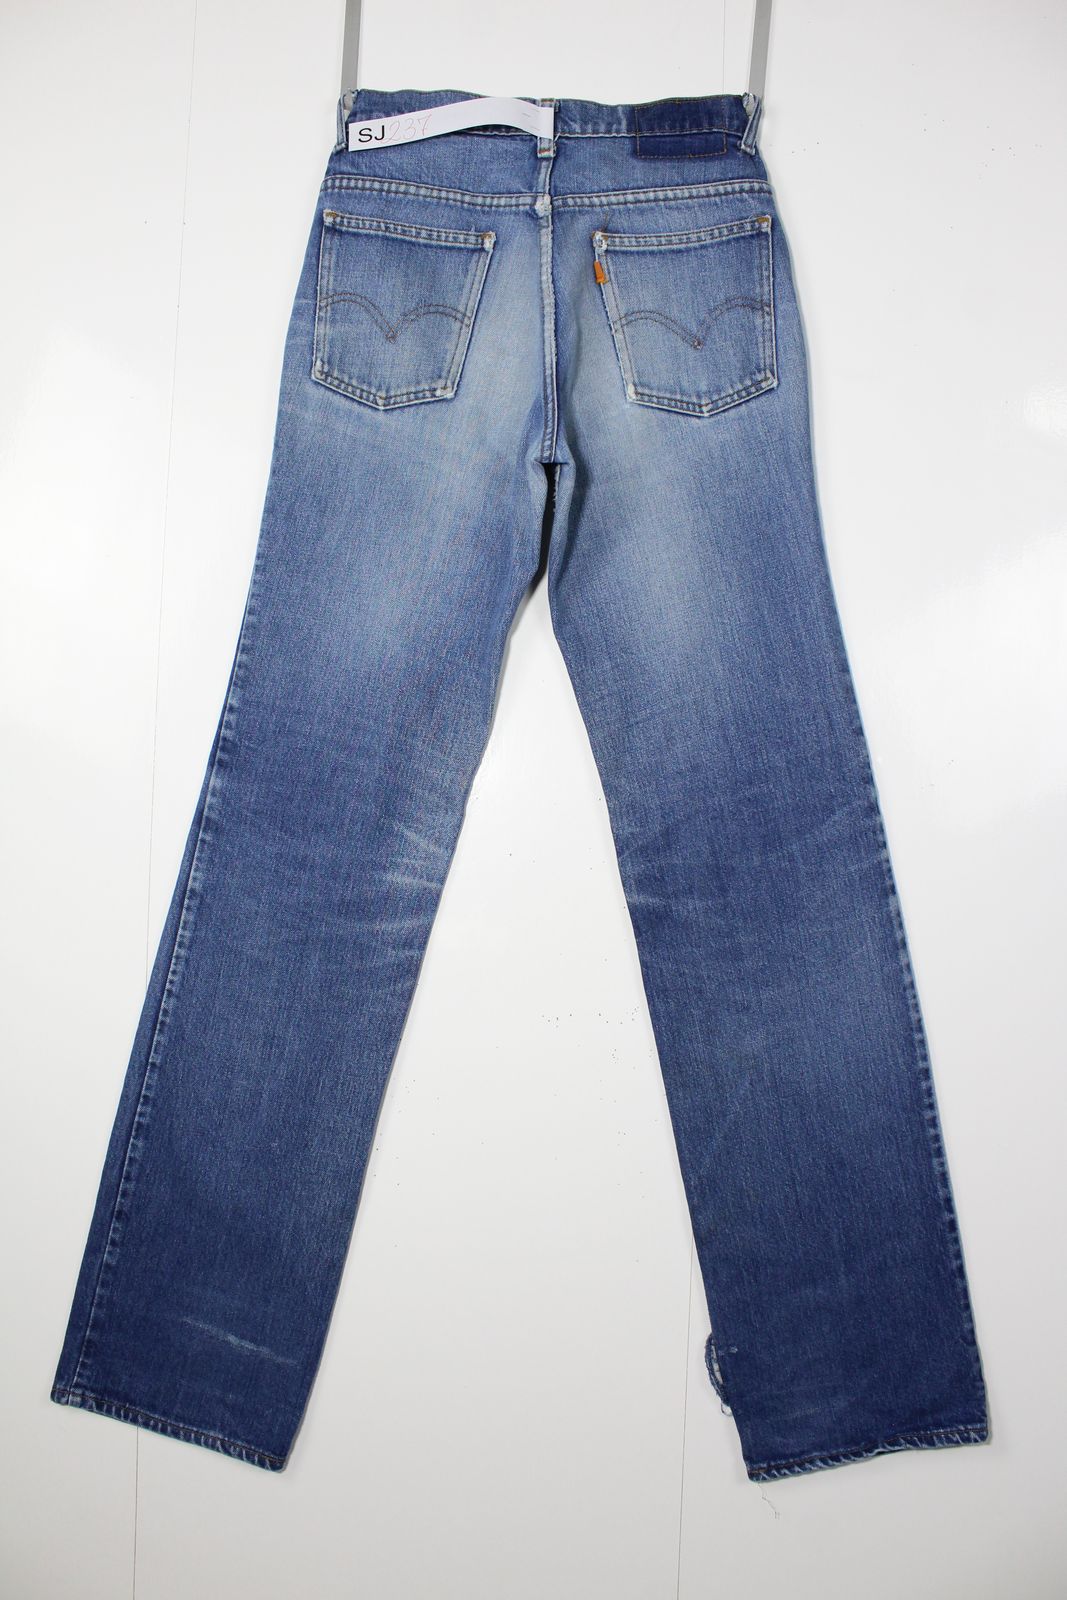 Levi's Orange Tab Denim W30 L36 Jeans Vintage Made in USA